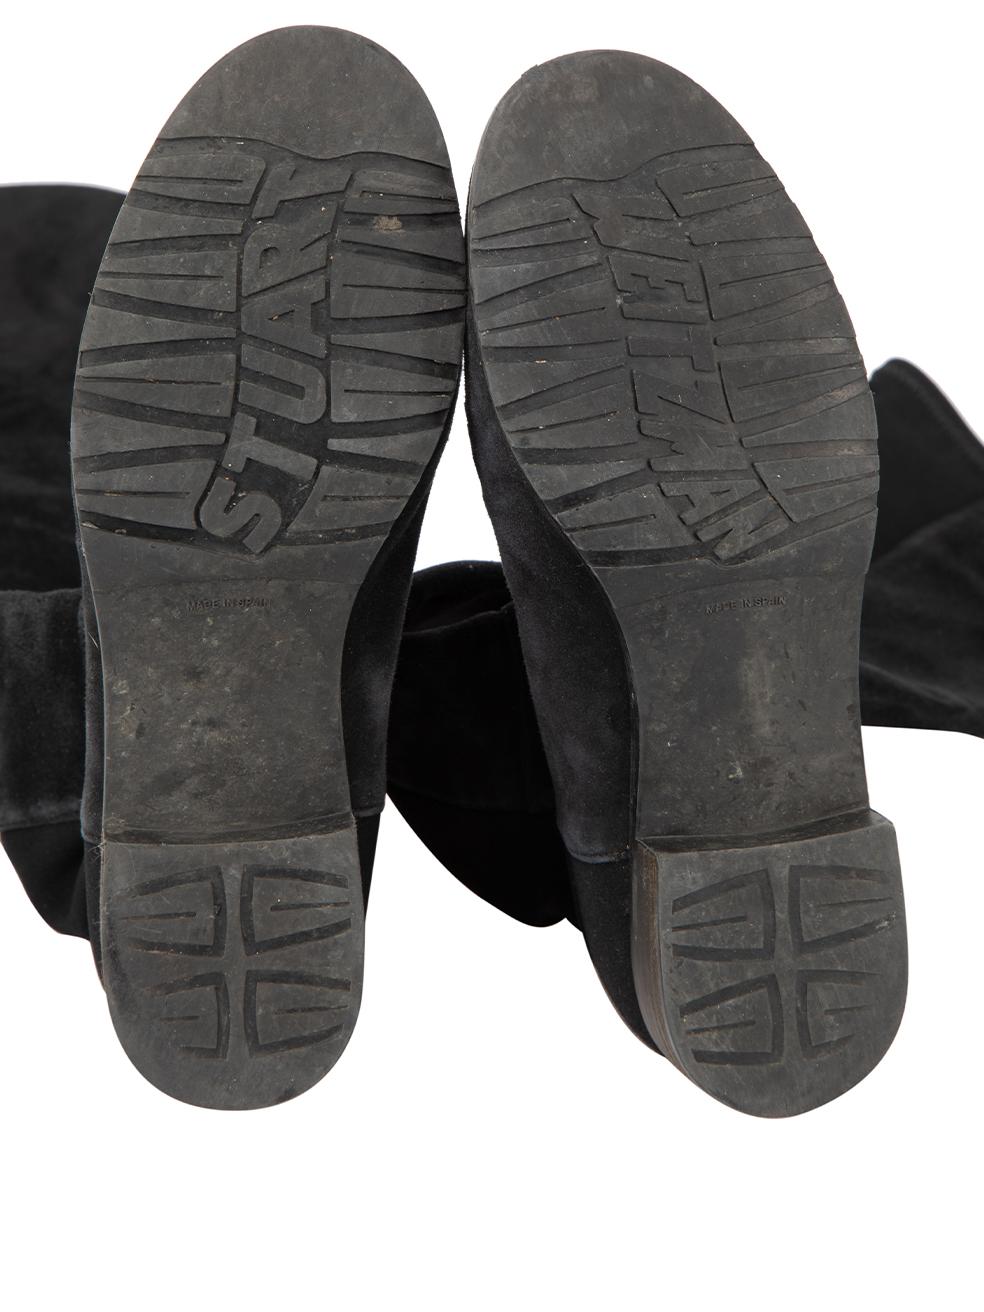 Stuart Weitzman Women's Black Suede Leather Round Toe Thigh Boots 1